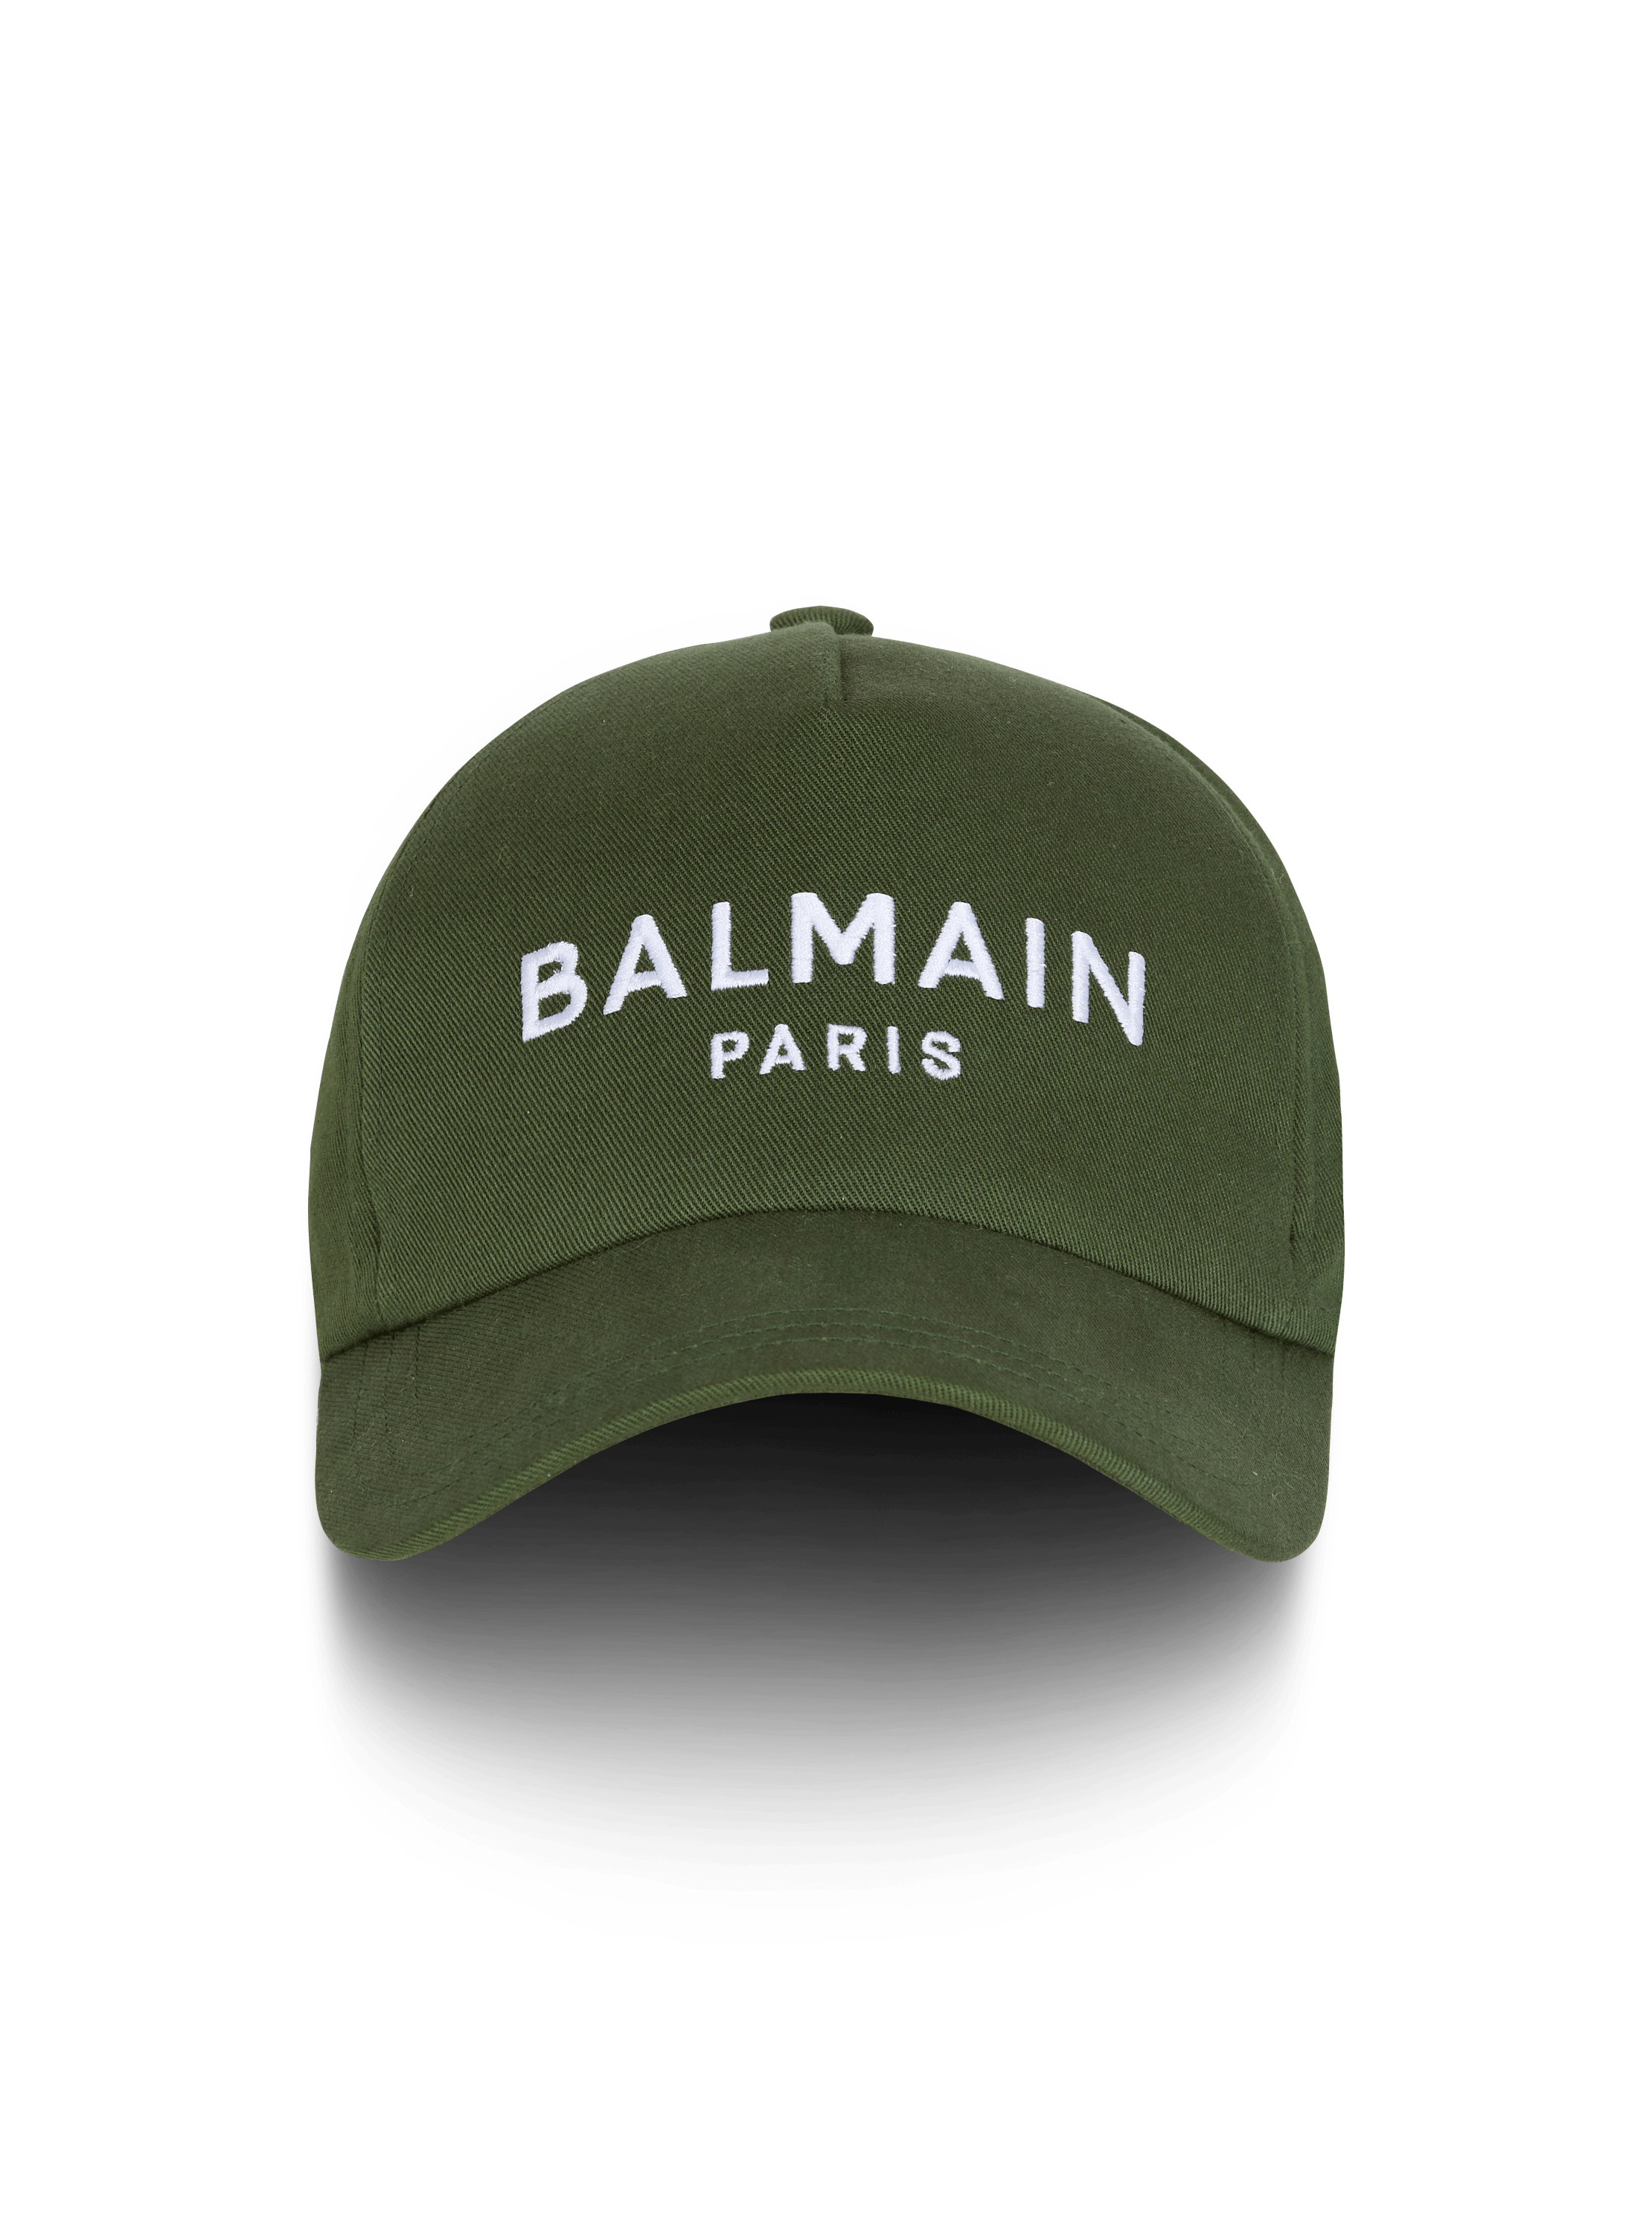 Baumwollkappe mit Balmain Paris-Stickerei